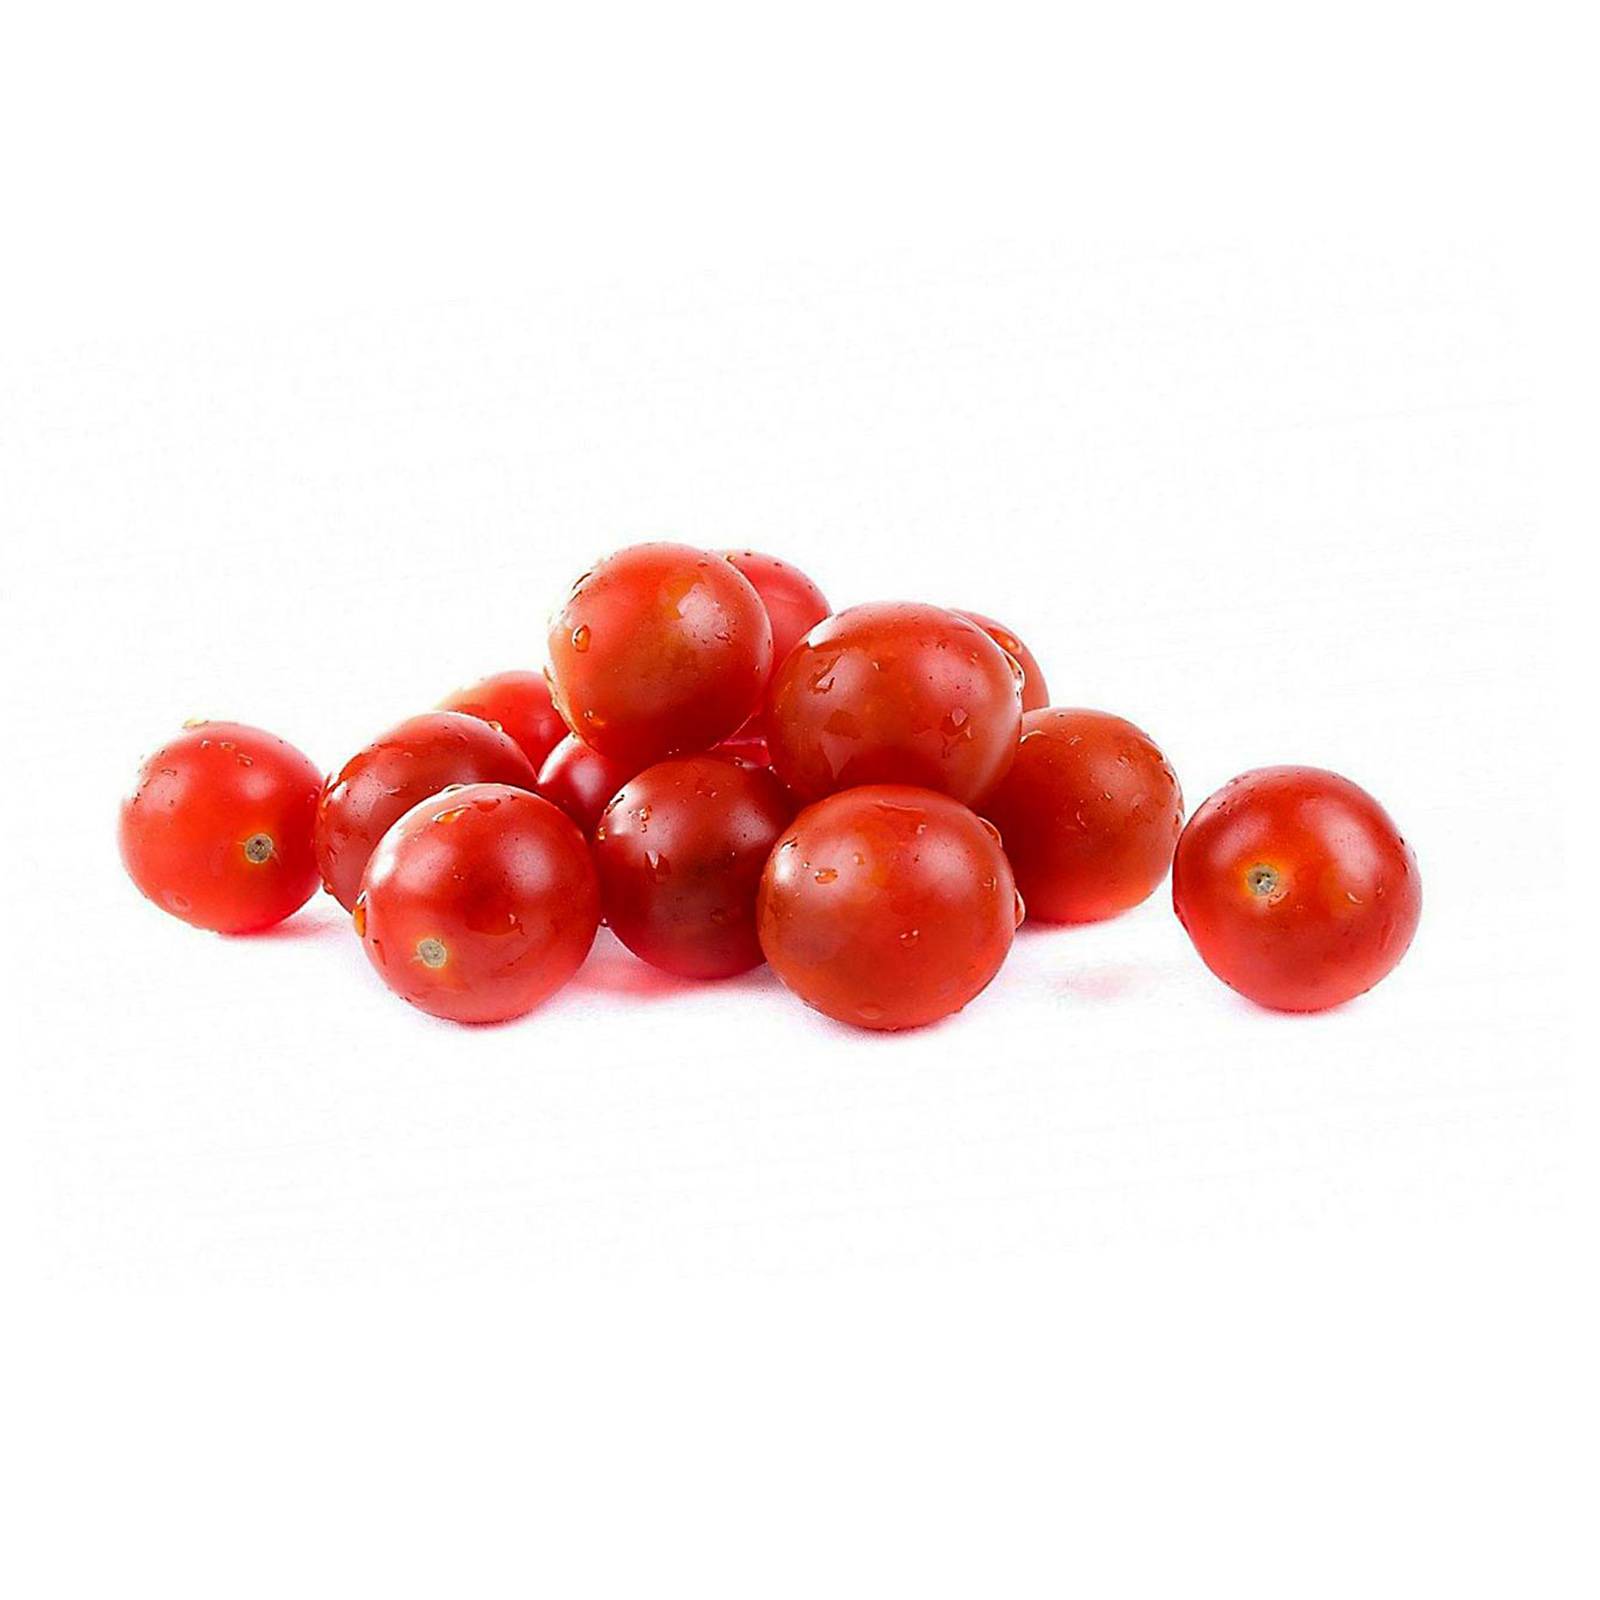 l_cherrytomaten_pixabay_1600 Tomaten - Party­tomaten - Hofladen Altkö